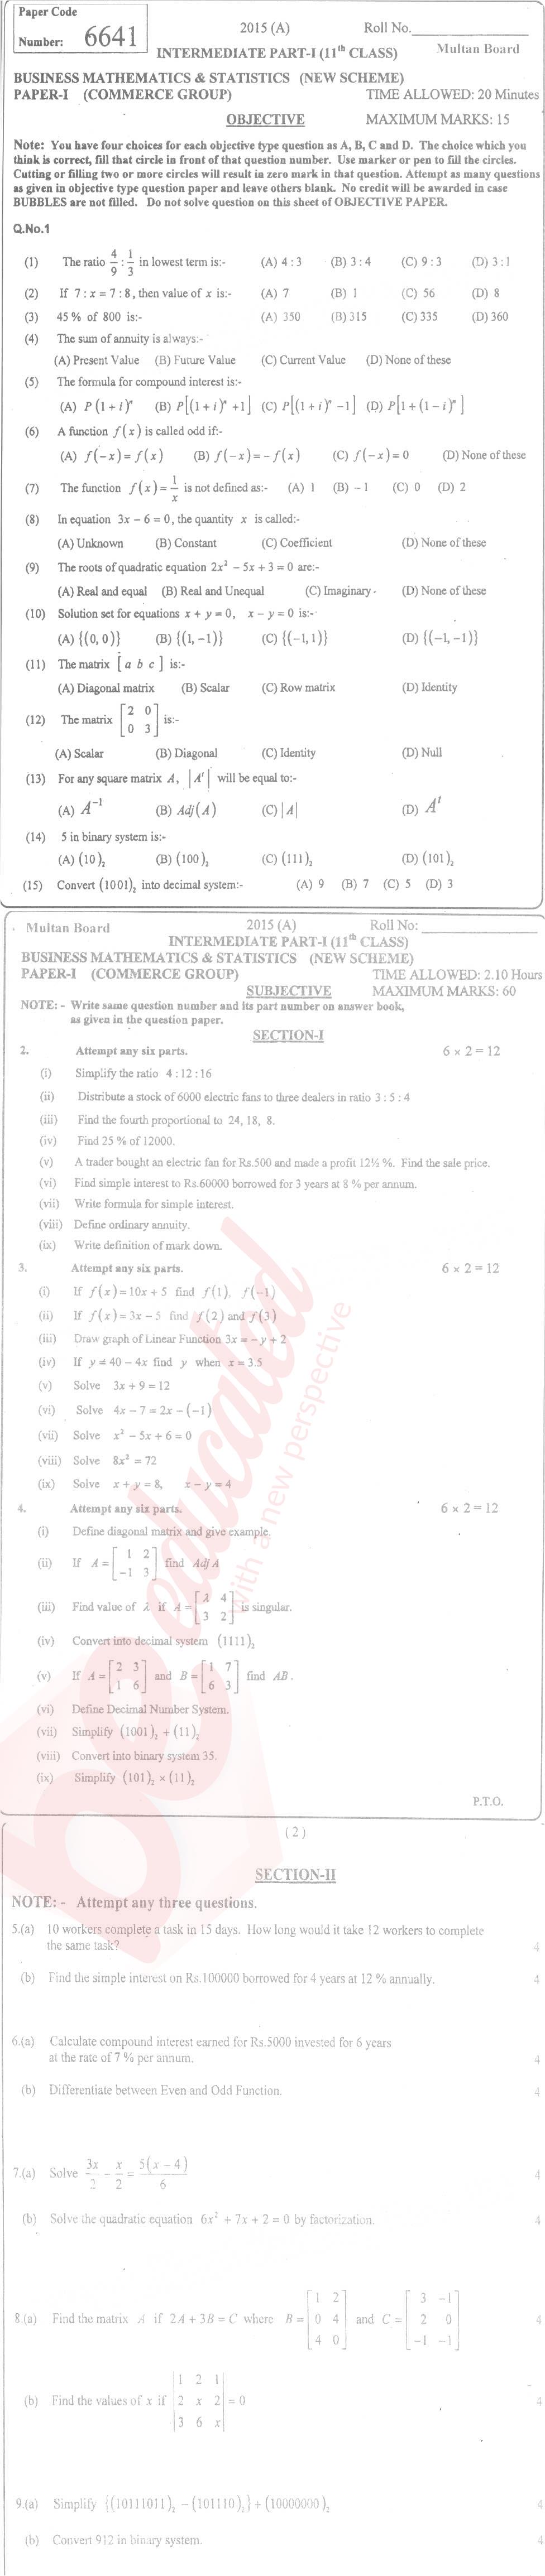 Business Mathematics ICOM Part 1 Past Paper Group 1 BISE Multan 2015